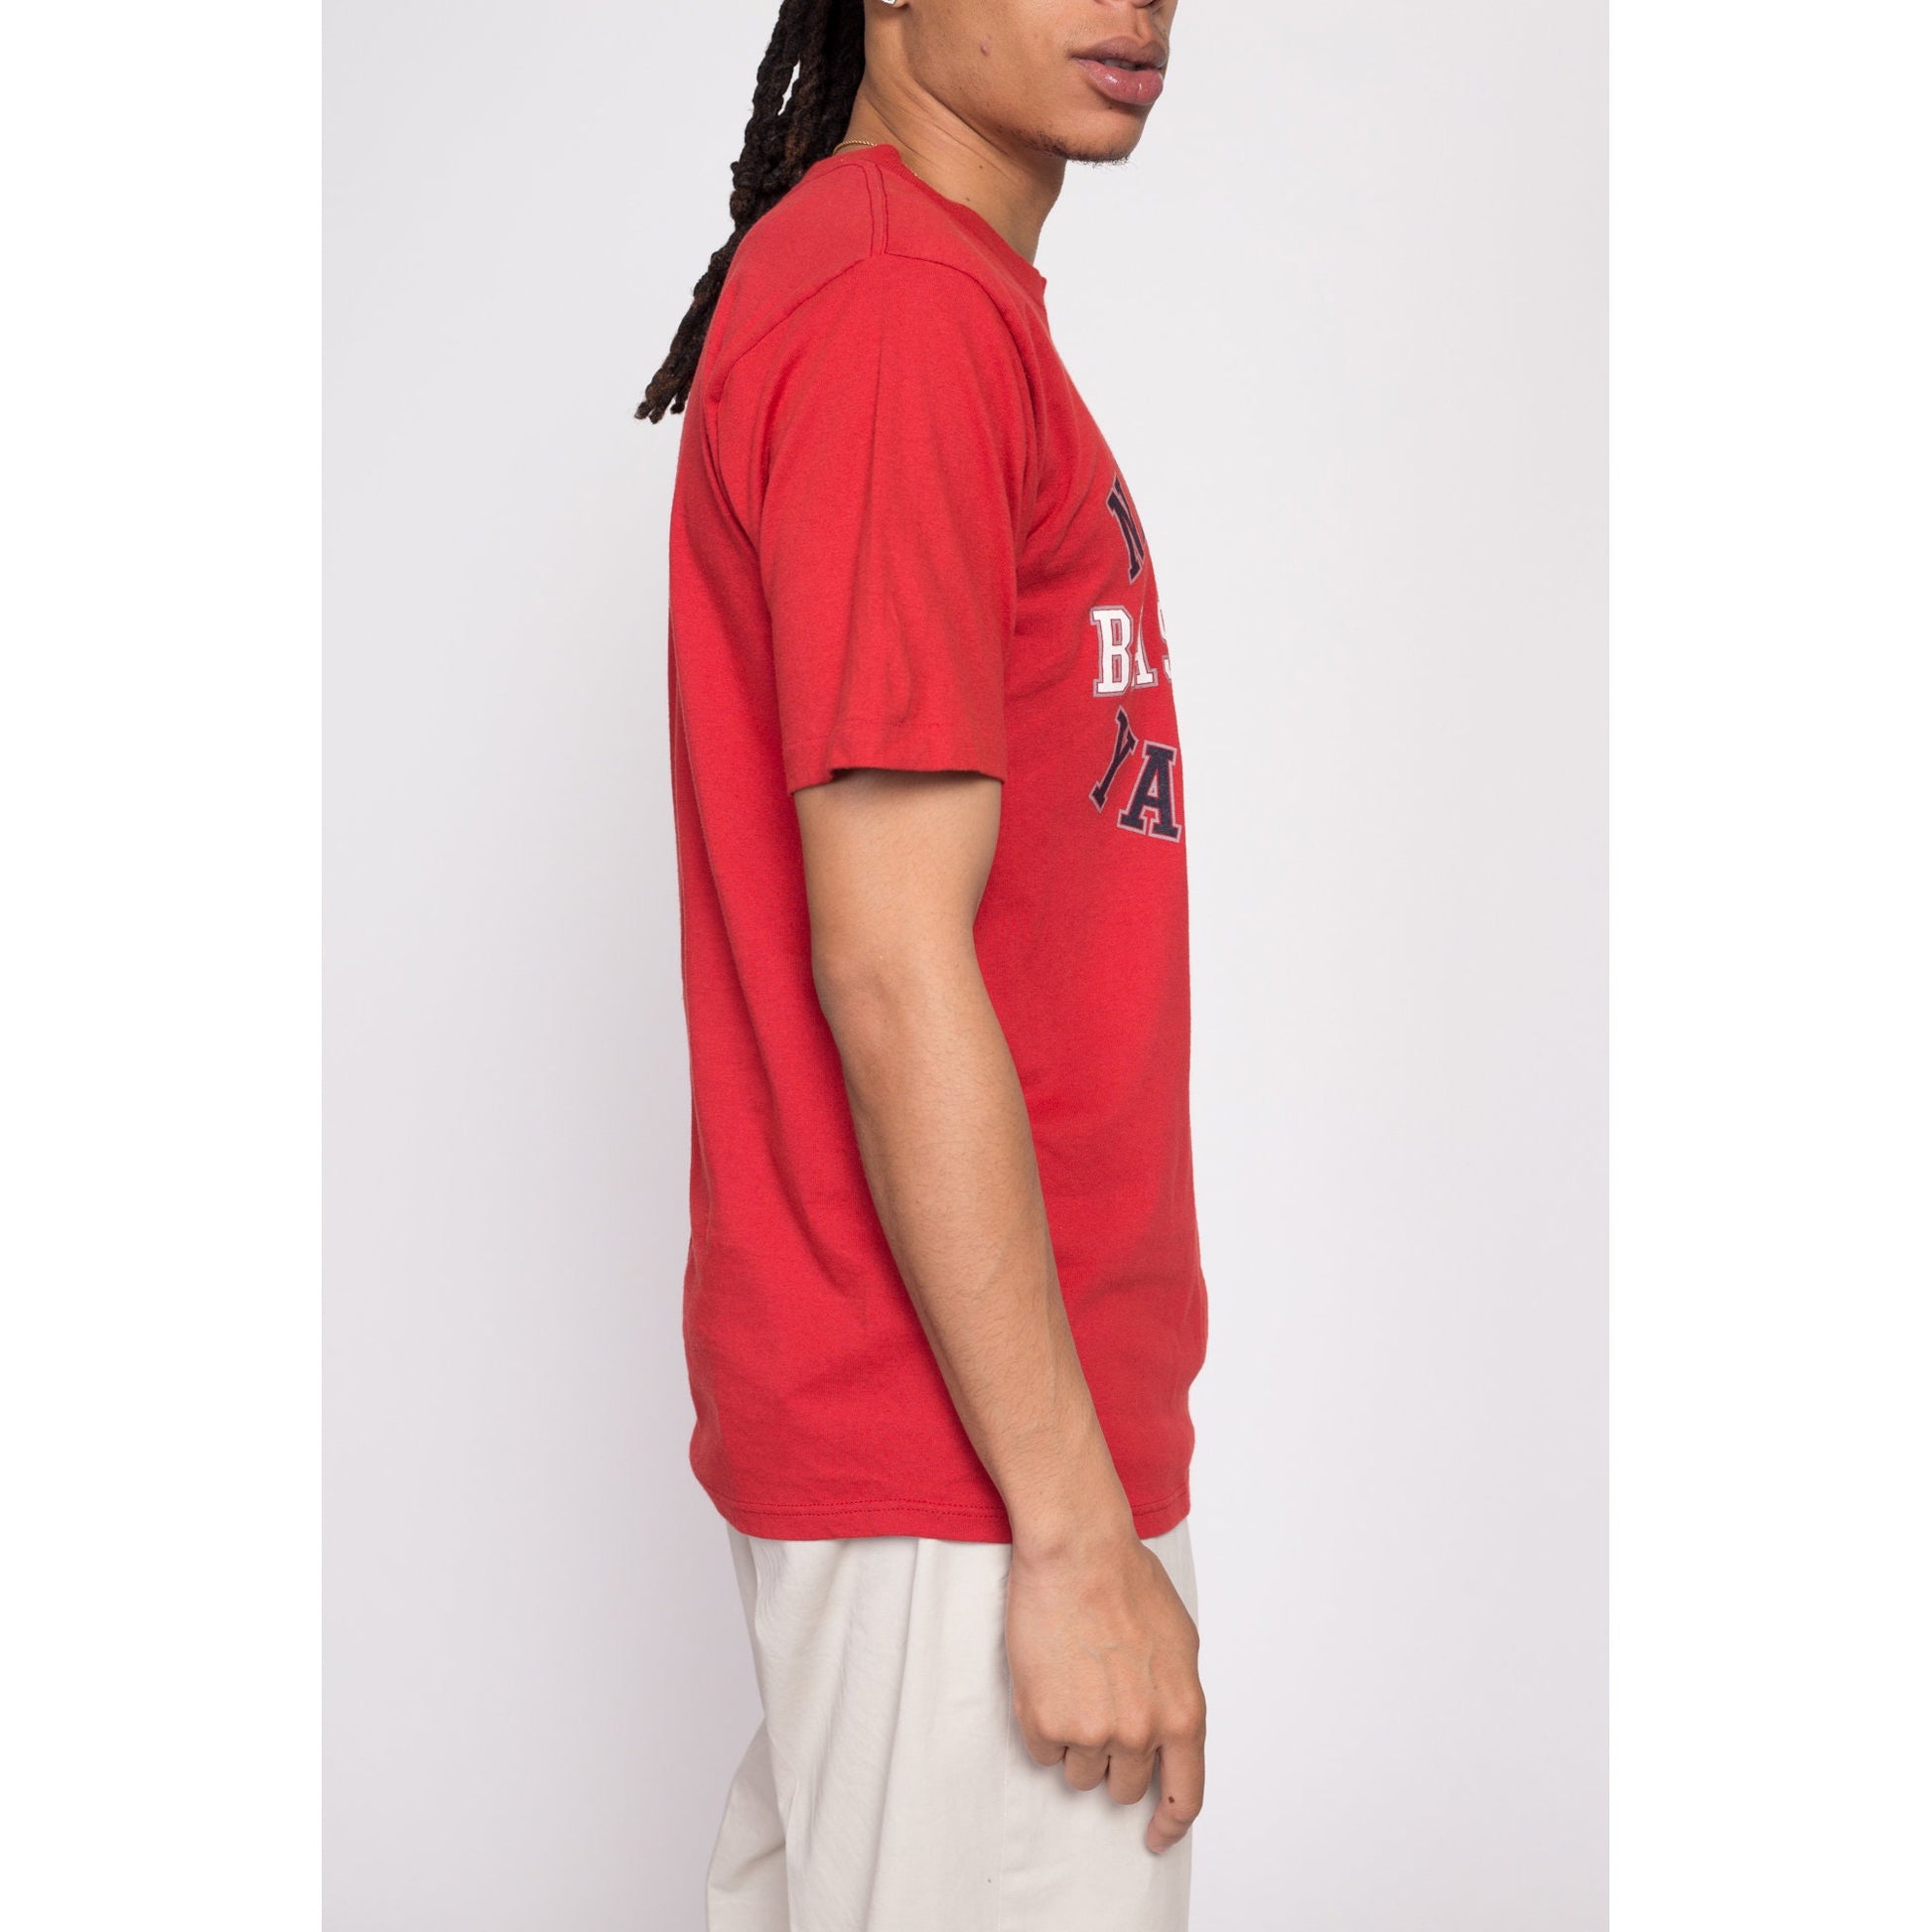 Yankees Baseball Shirt, New York Baseball Shirt for Women, Men and